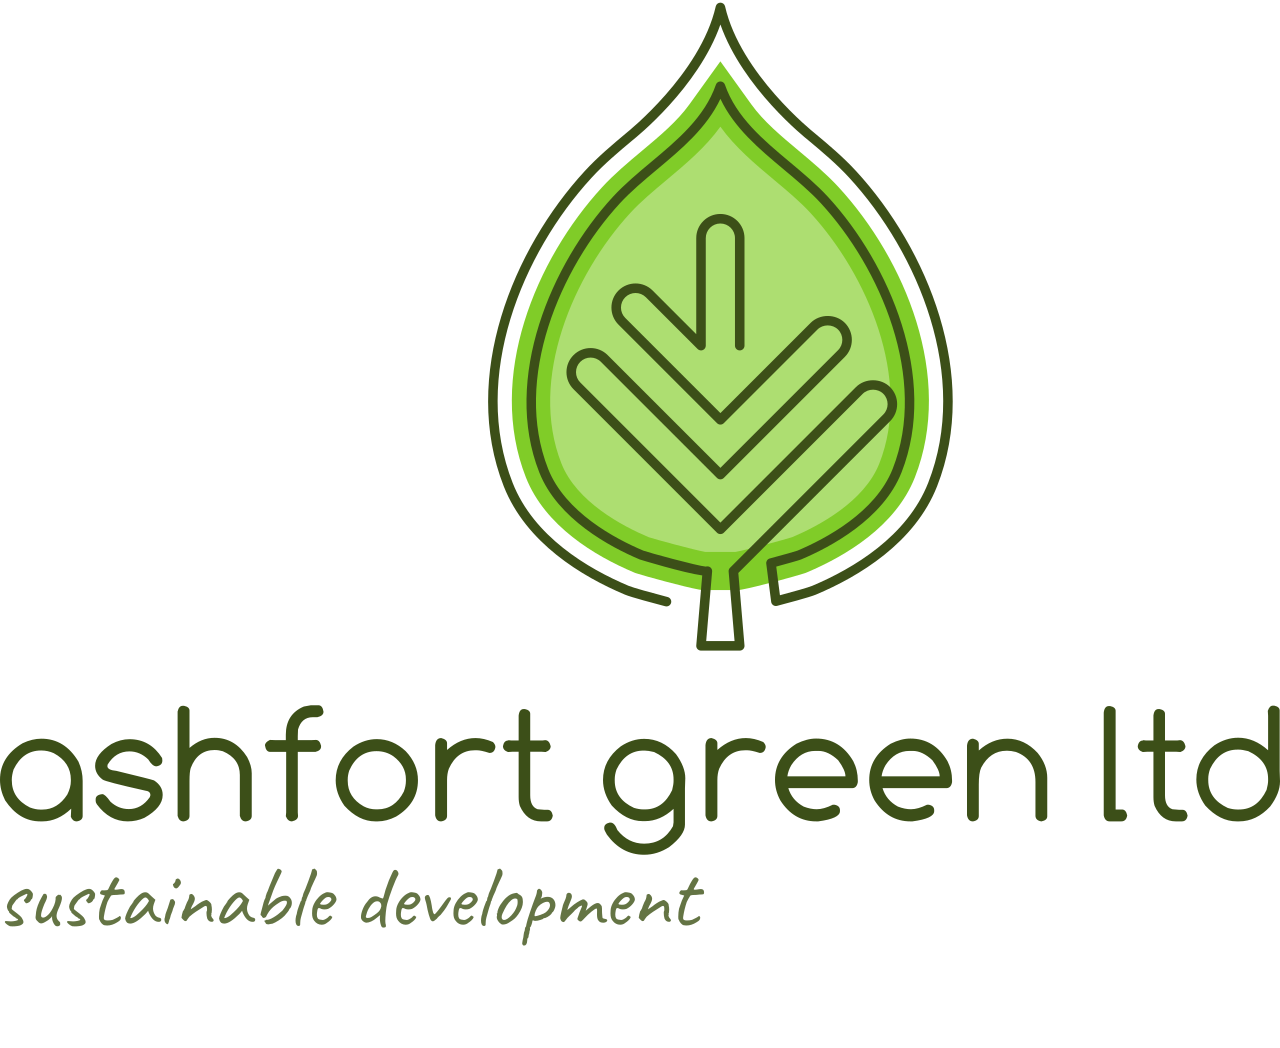 ashfort green ltd's logo